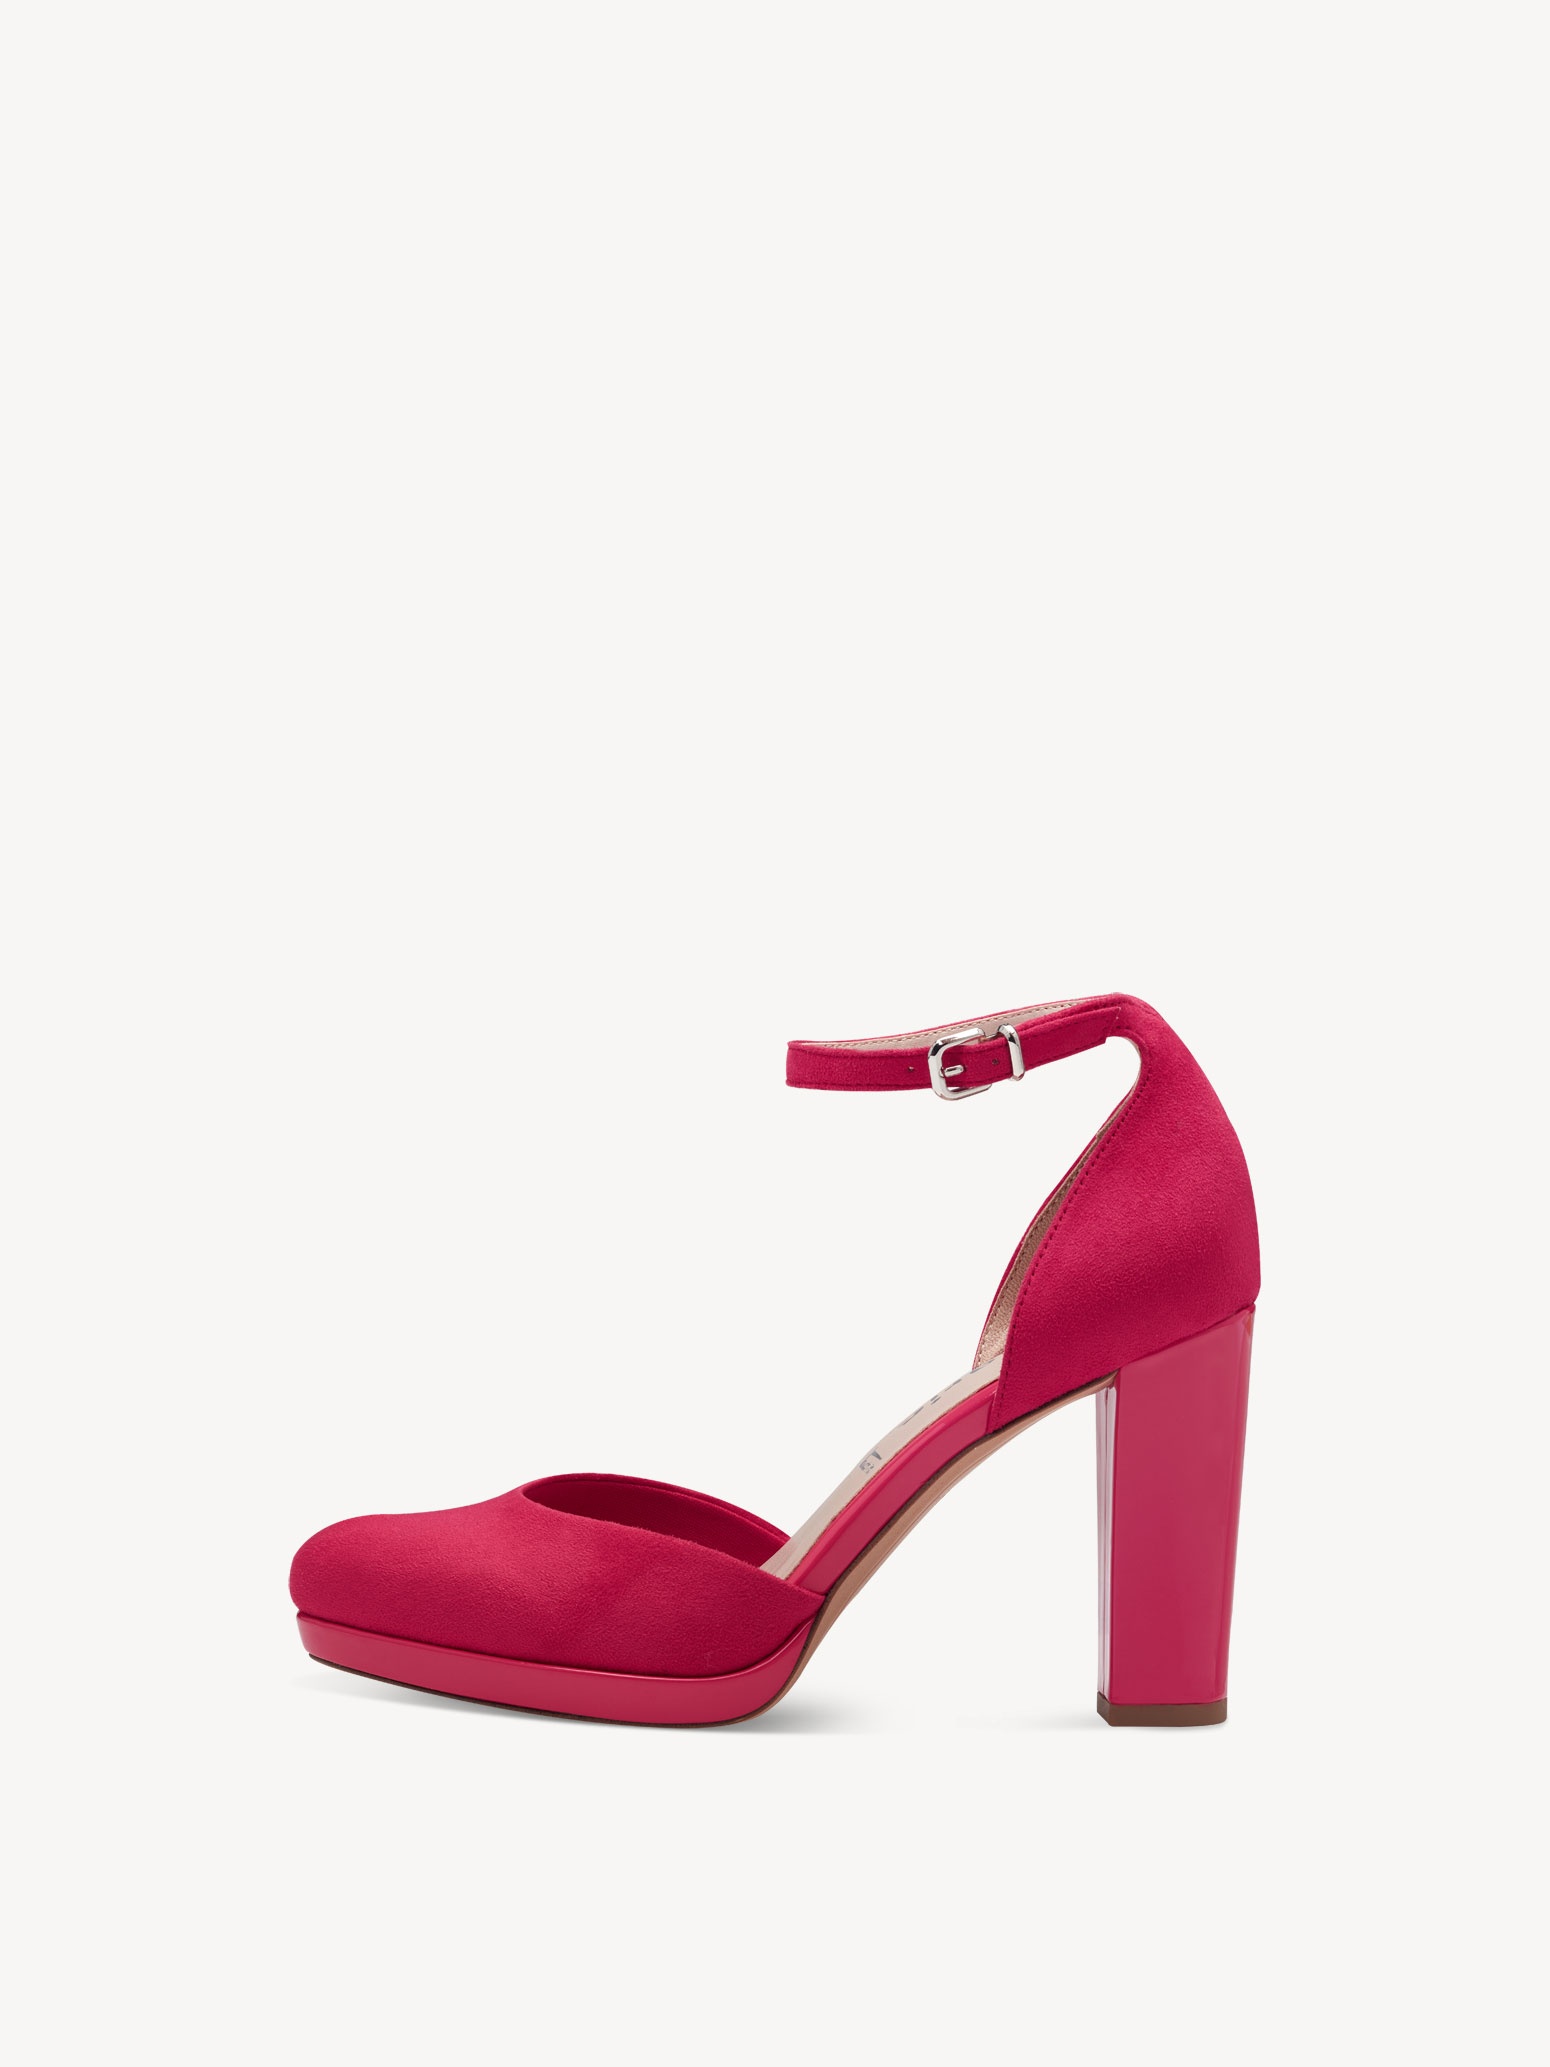 Red Lace up Platform High Heel Boots from KoKo Fashion | High heel boots, Red  high heels, Fashion high heels